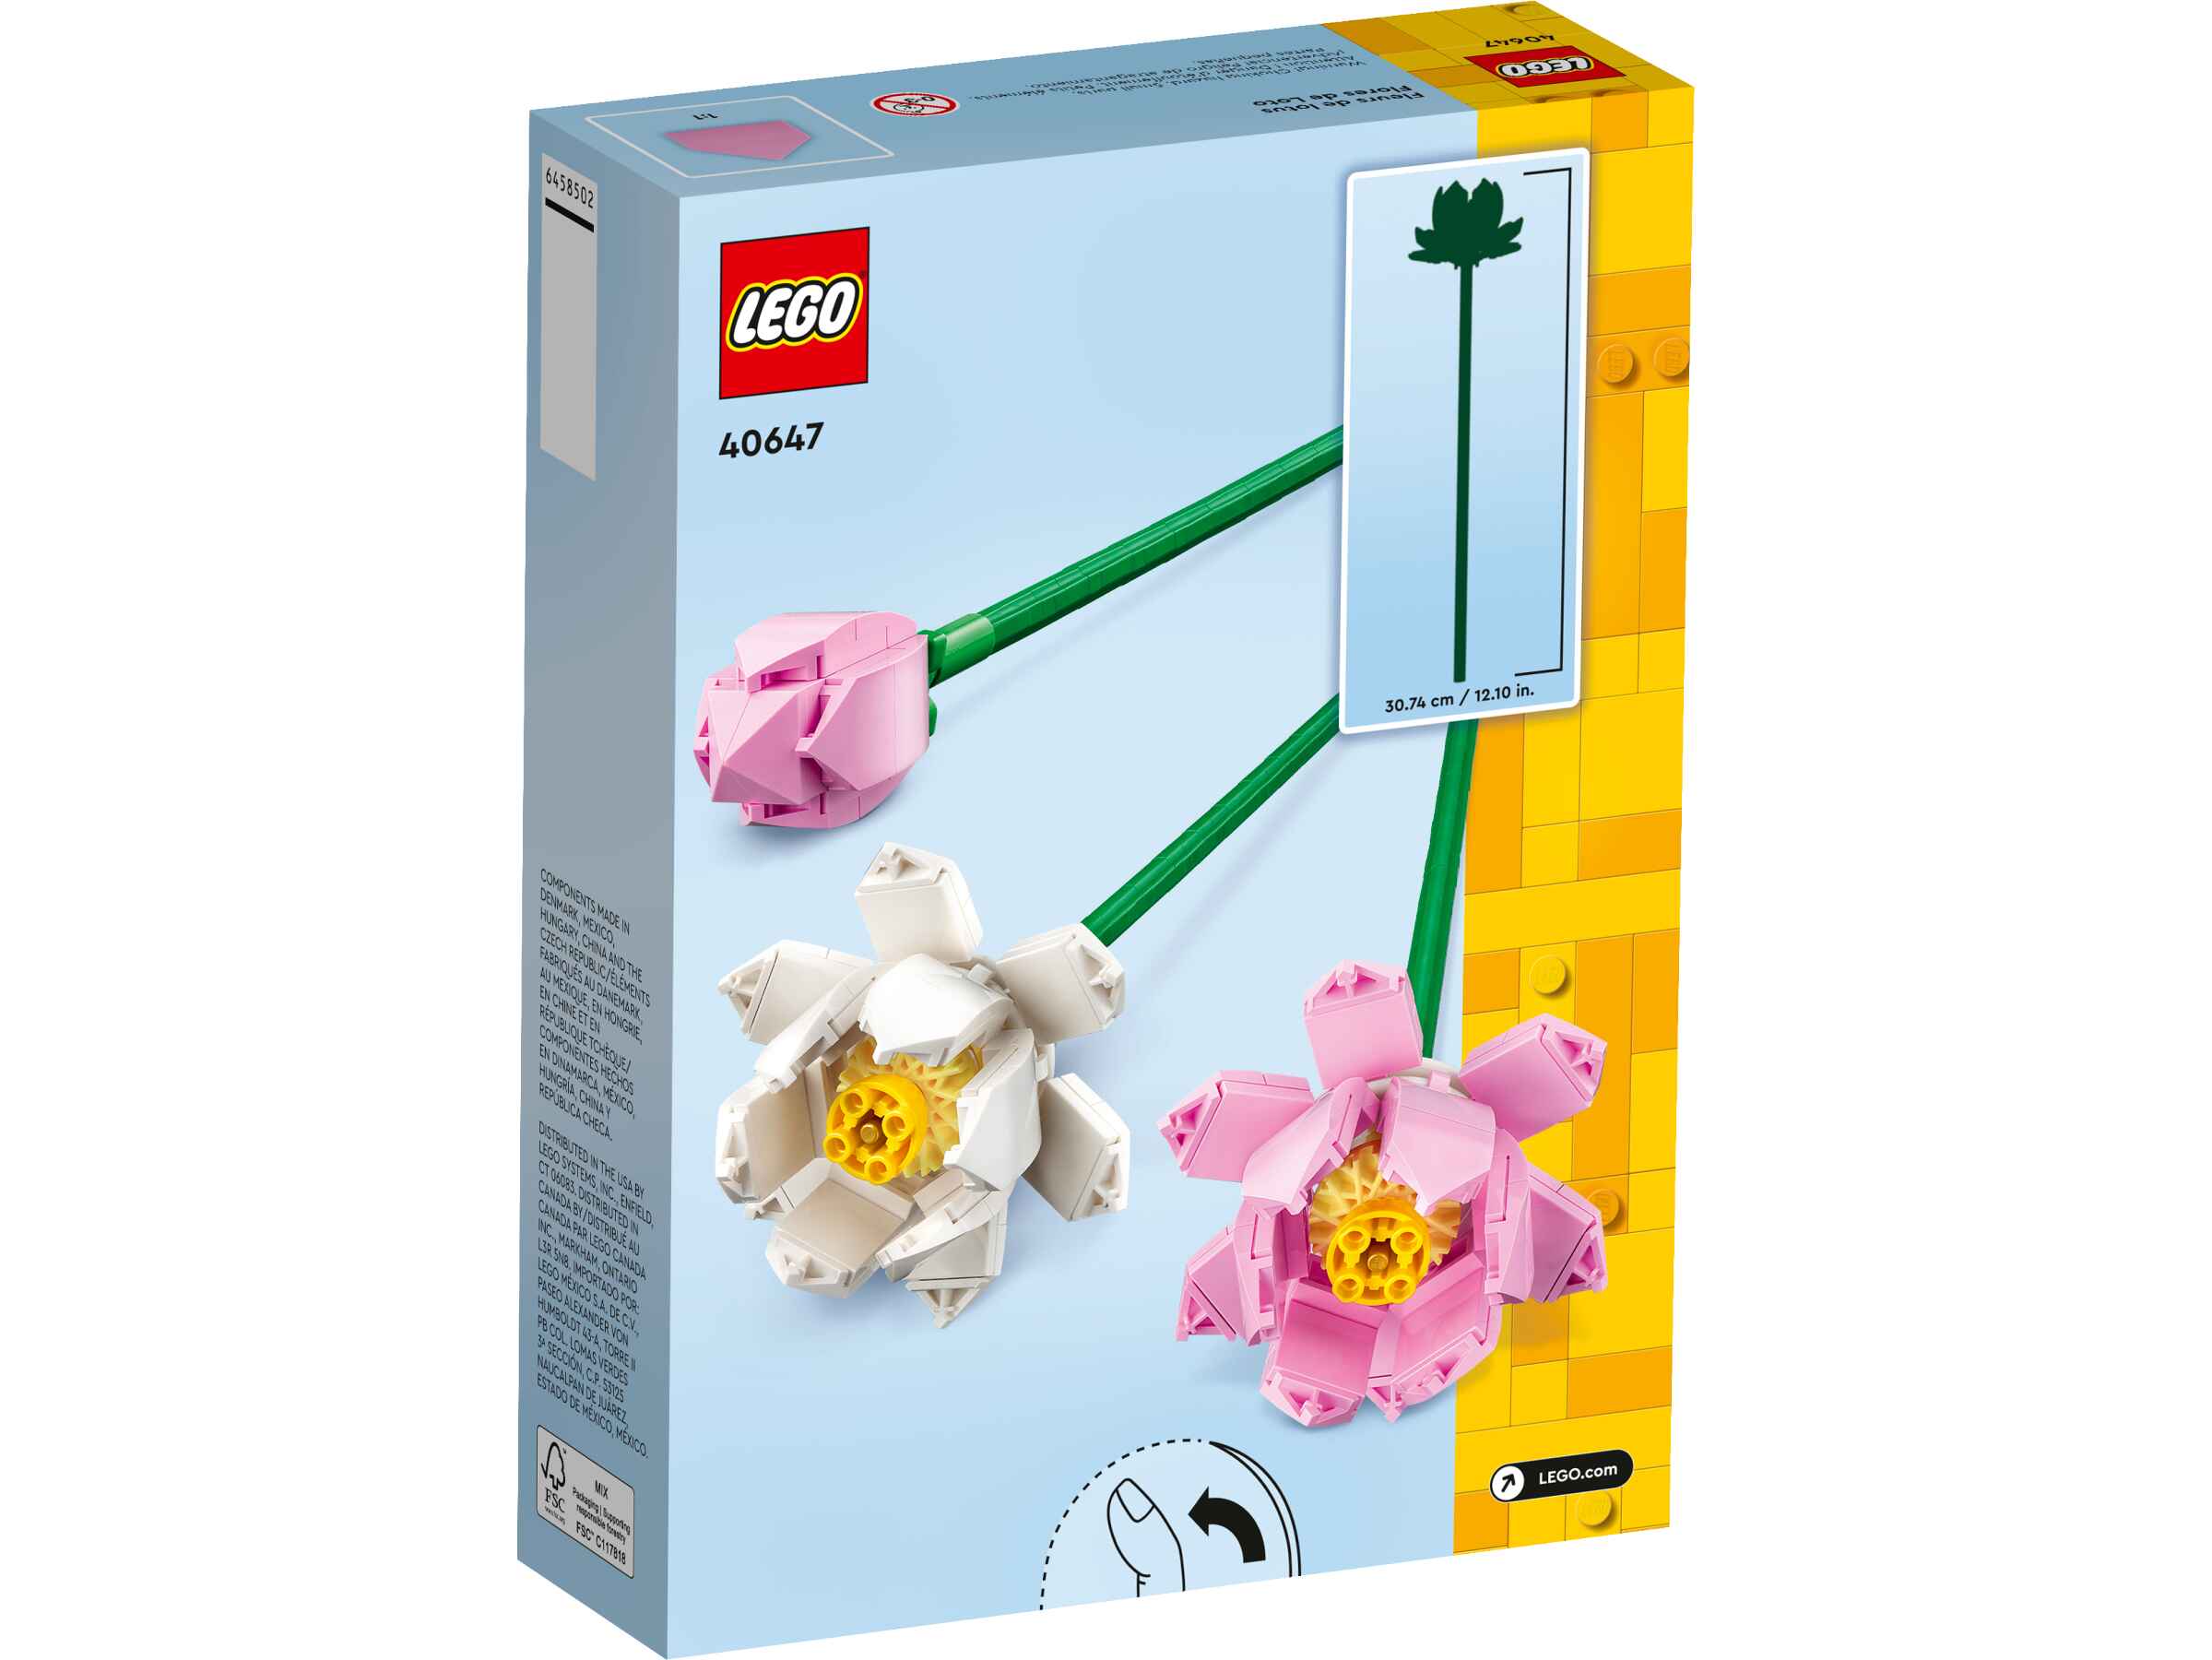 LEGO 40647 Iconic Lotusblumen, 2 Lotusblumen und Knospe